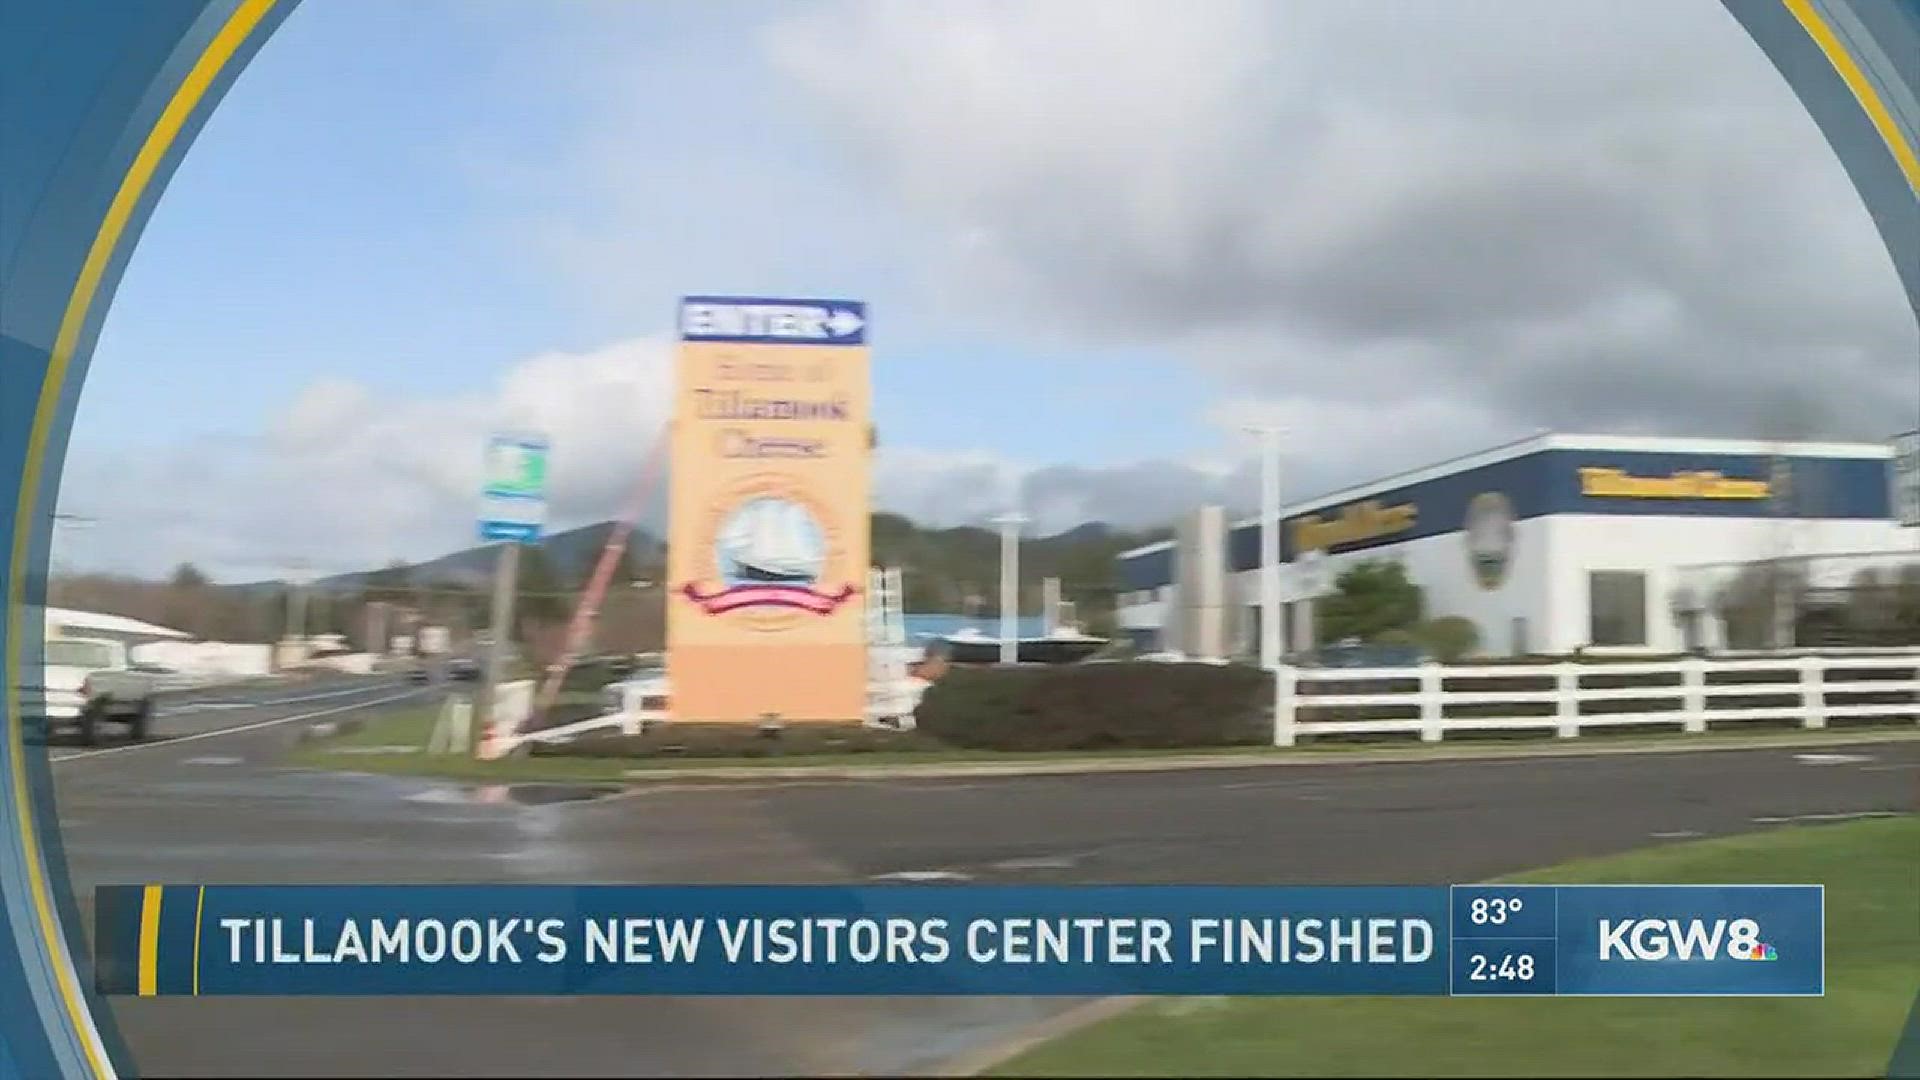 Tillamook's new visitors center finished